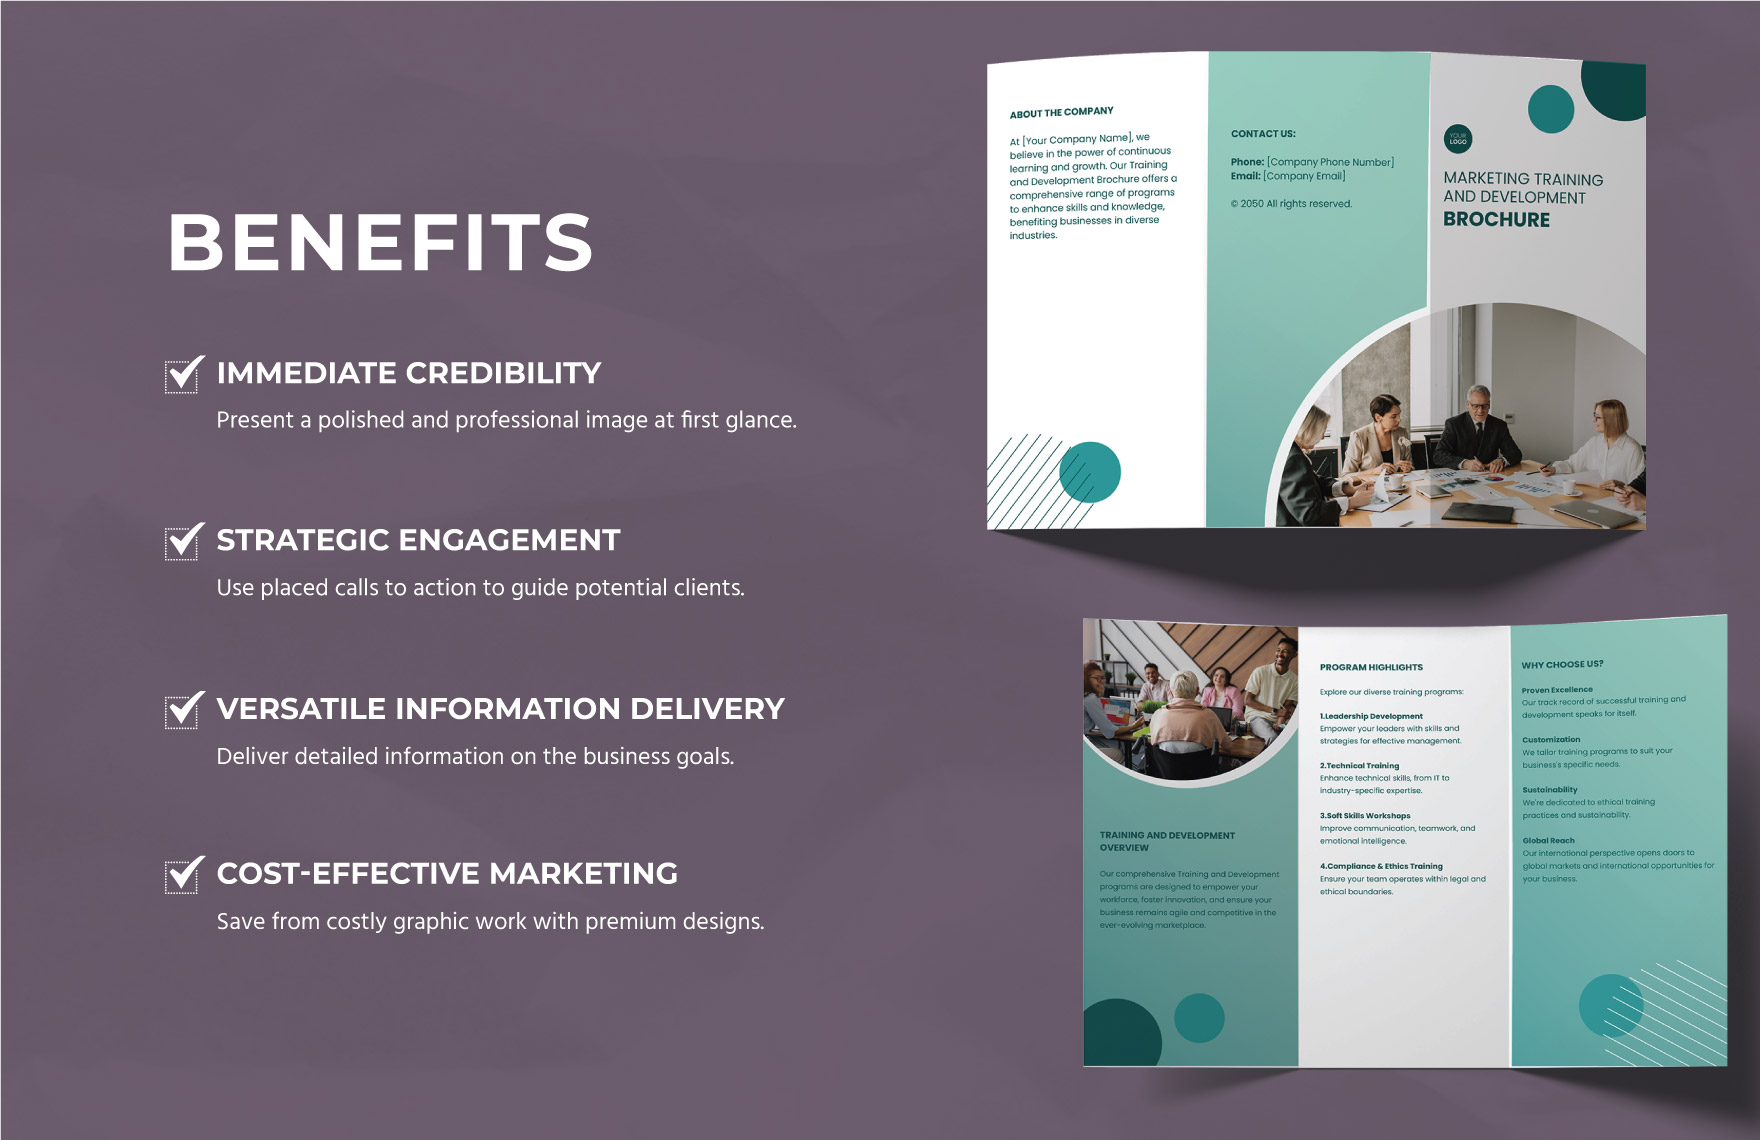 Marketing Training Development Brochure Template